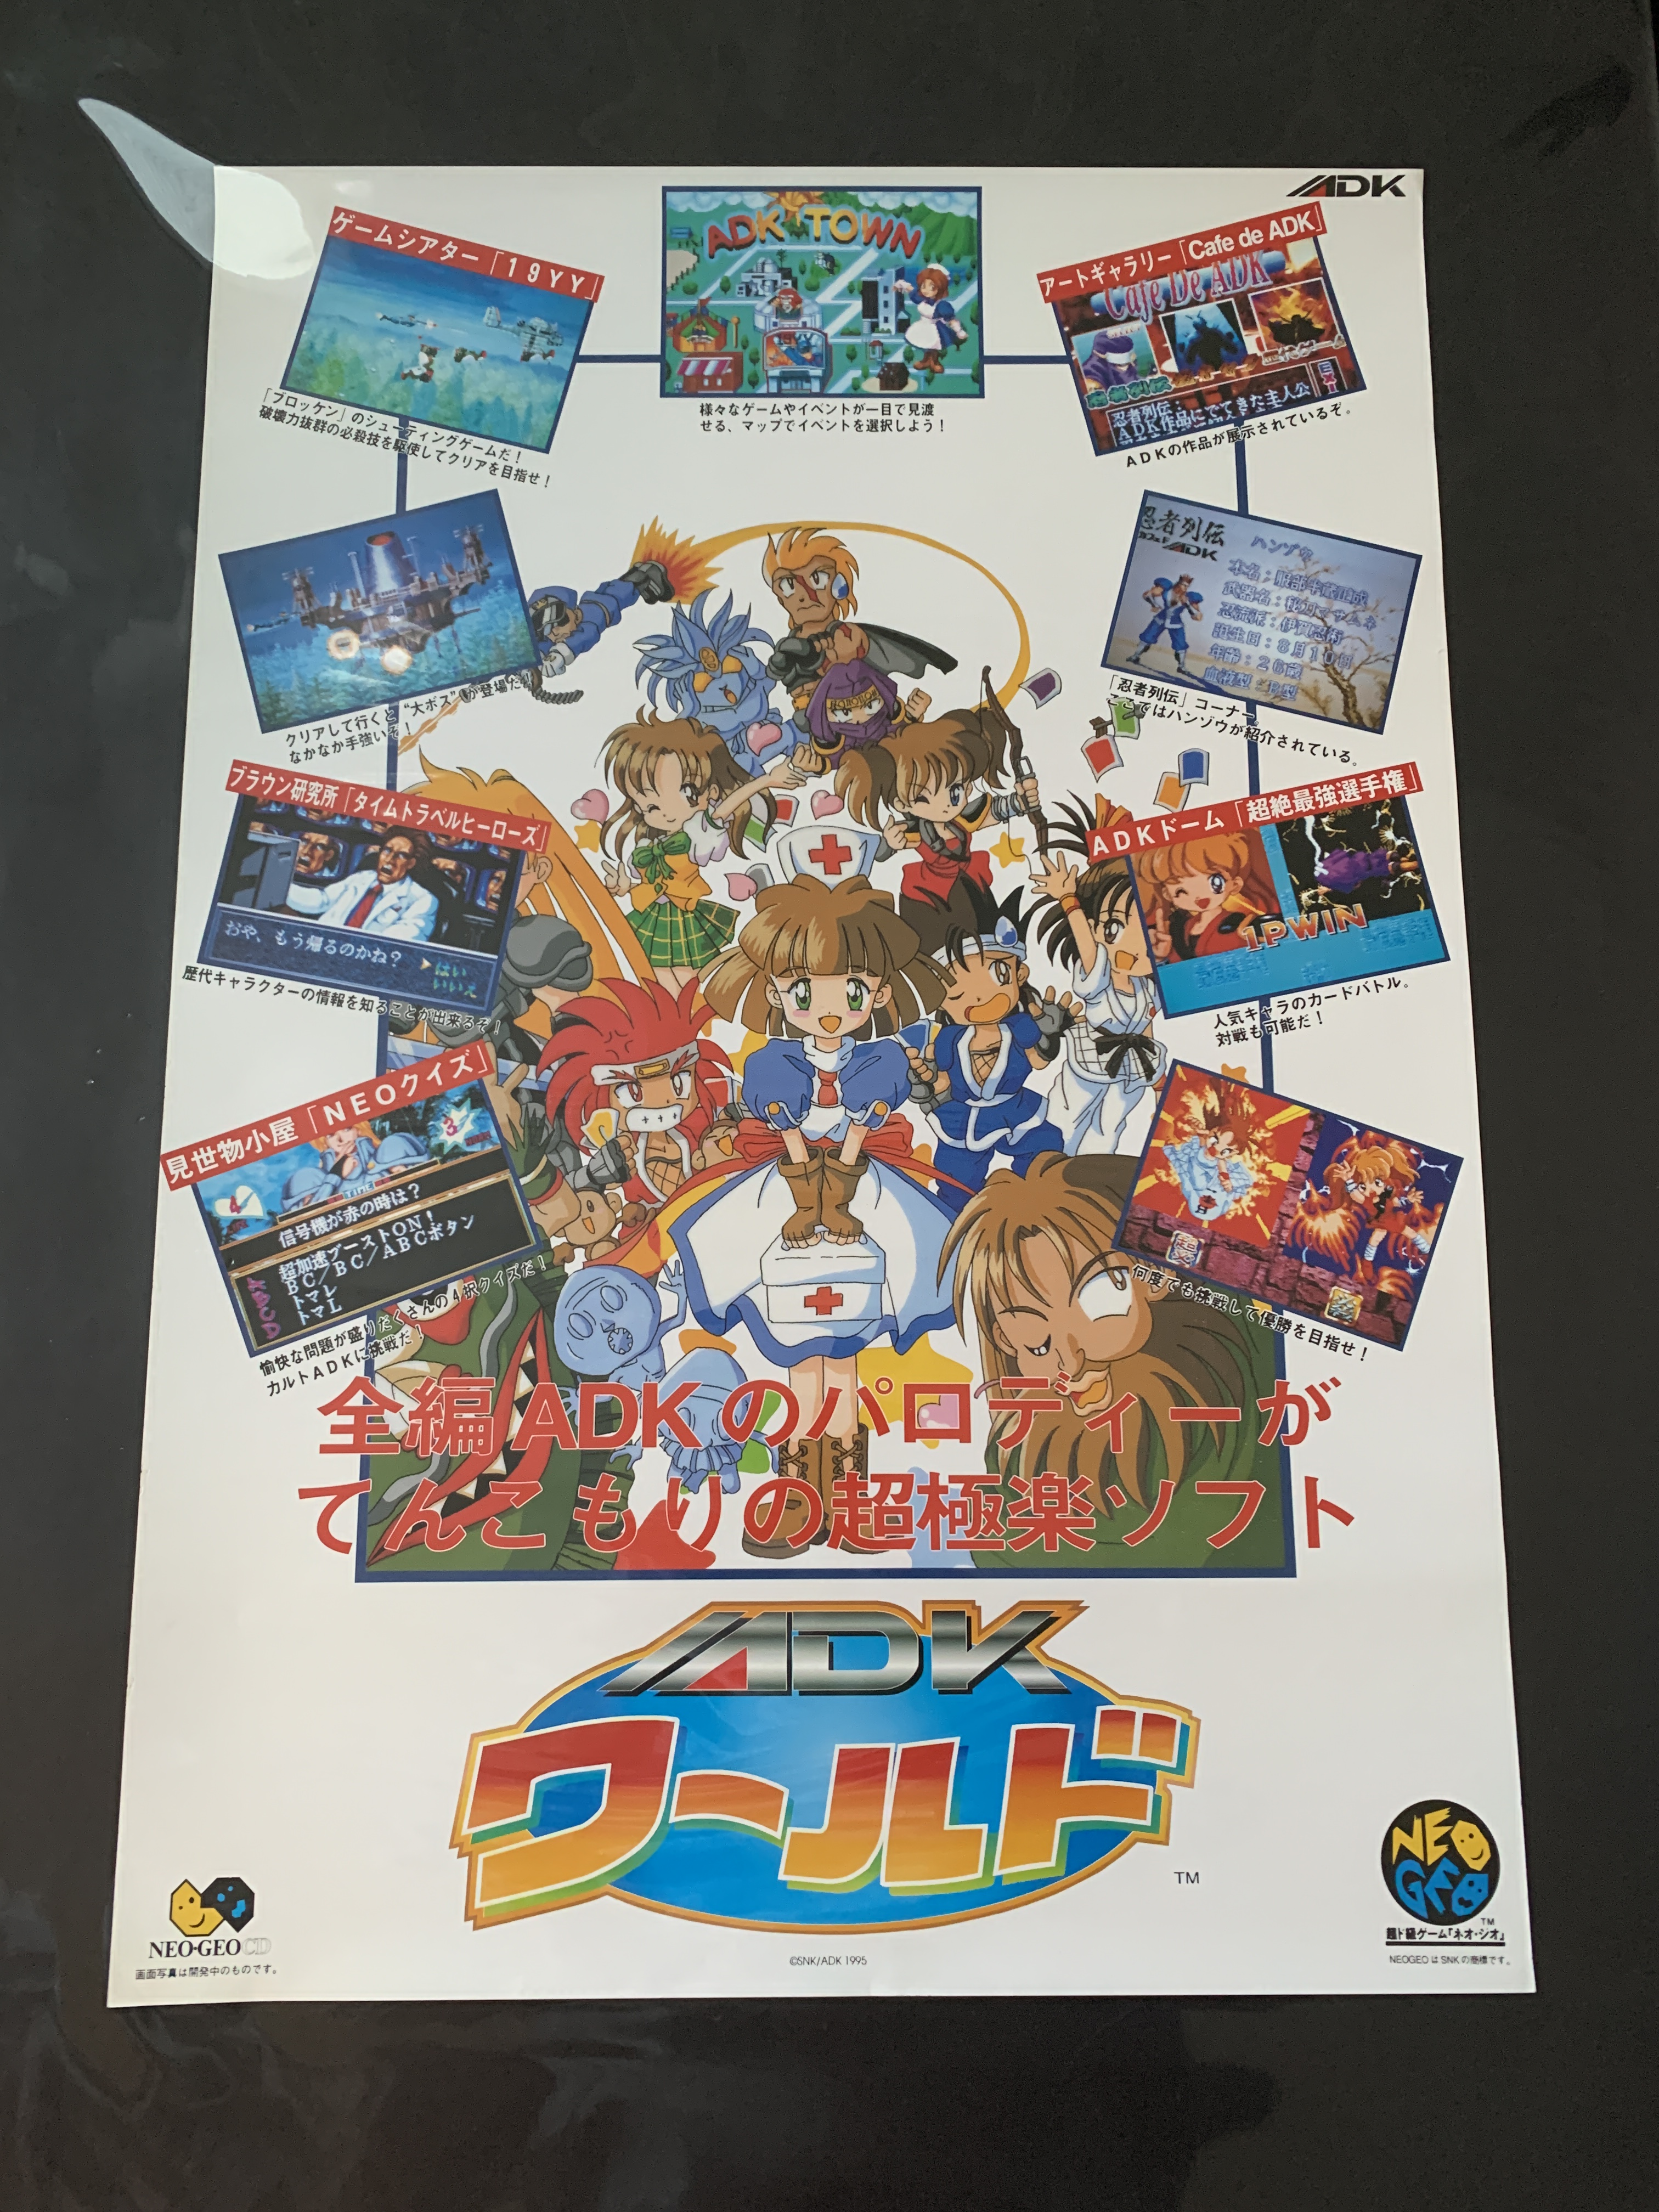 Neo•Geo CD Posters